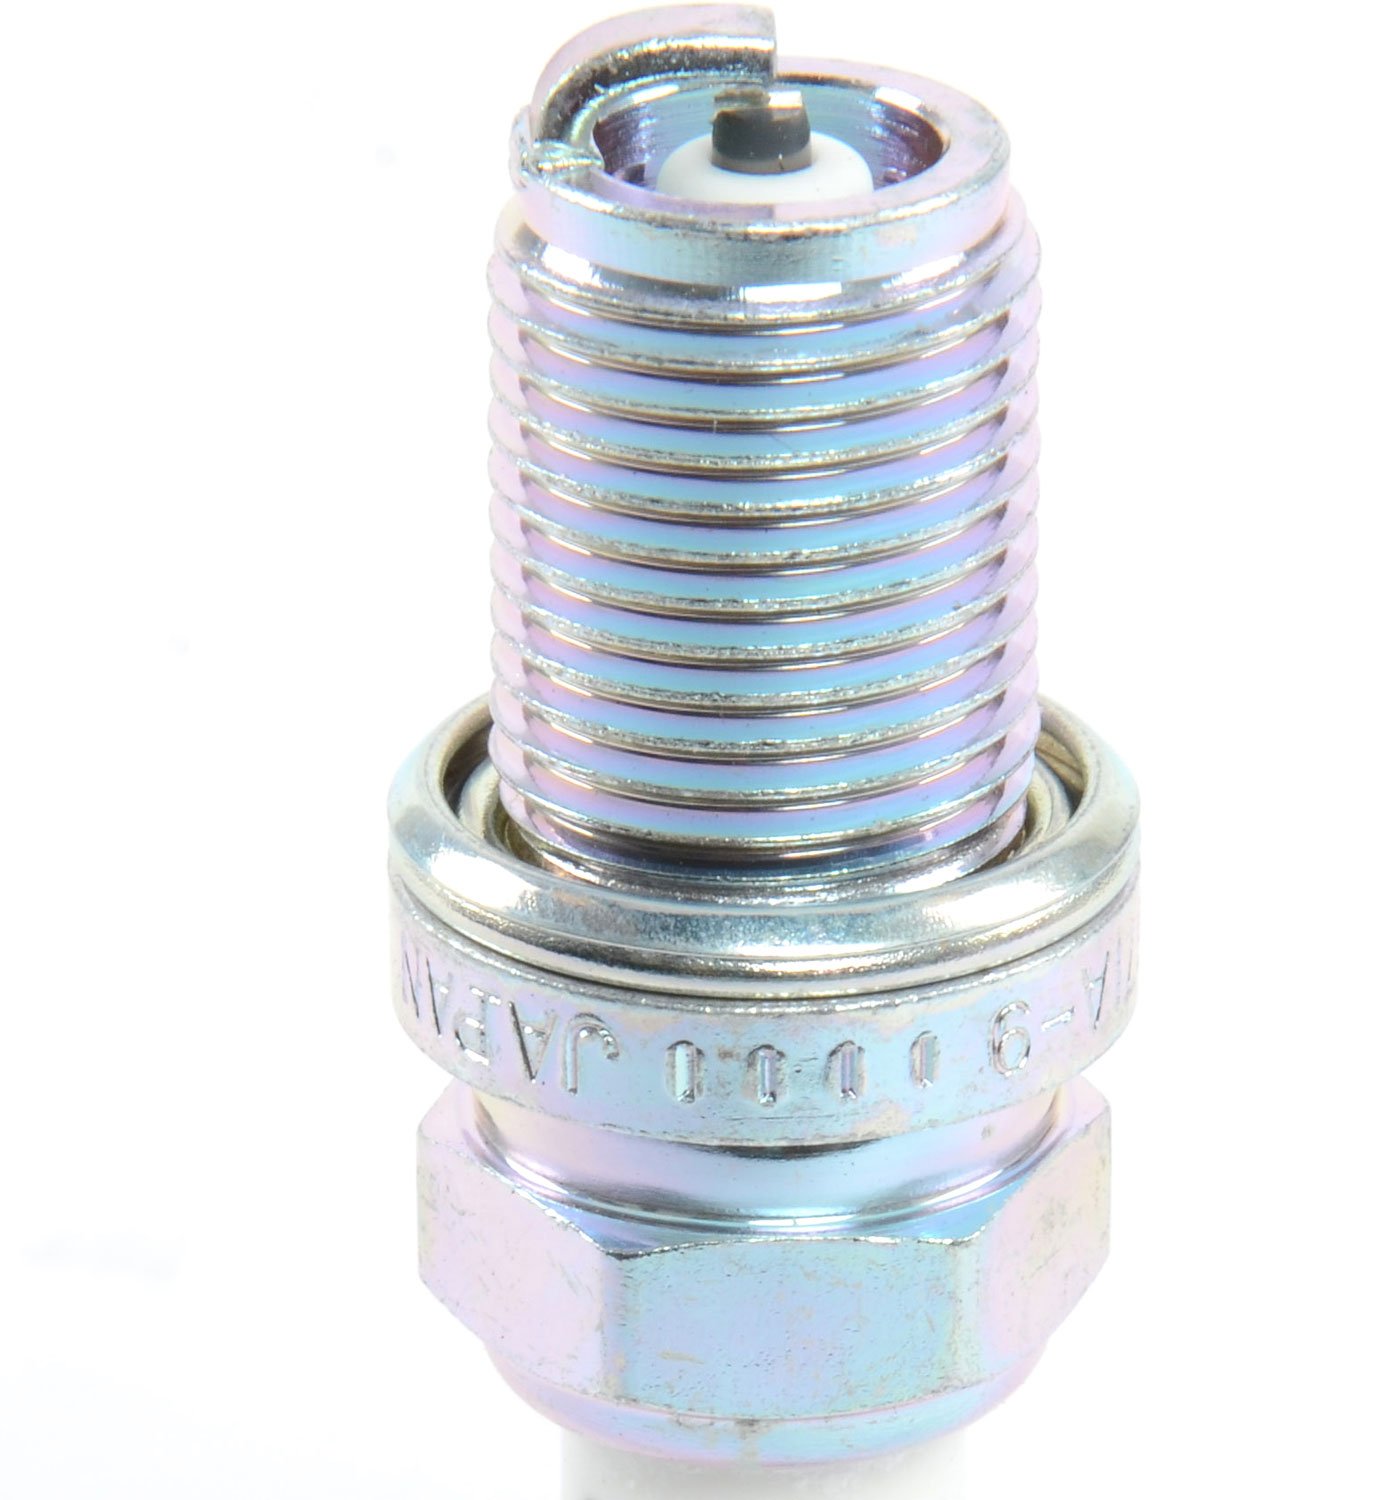 ACCEL 0416S-4 Shorty Copper Core Spark Plug, (Pack of 4) : :  Automotive